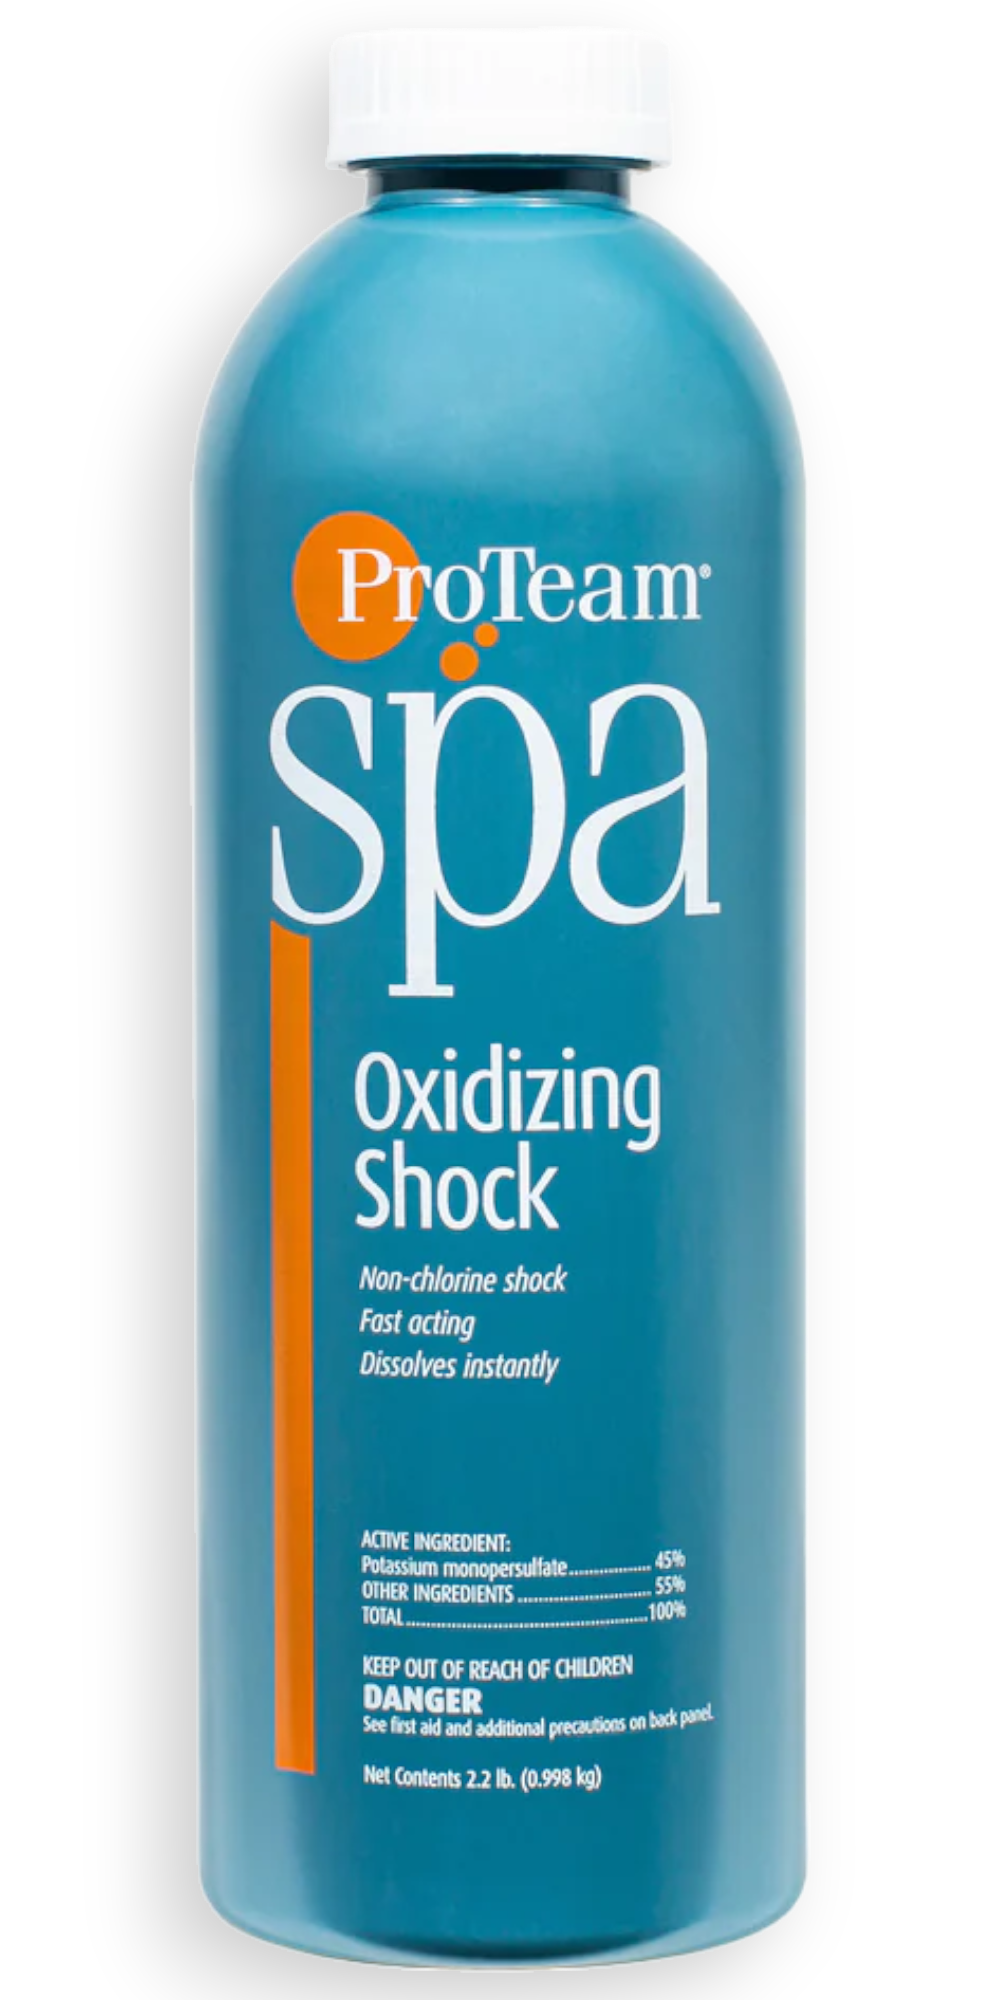 ProTeam Oxidizing Shock- 2lb Non-Chlorine Shock